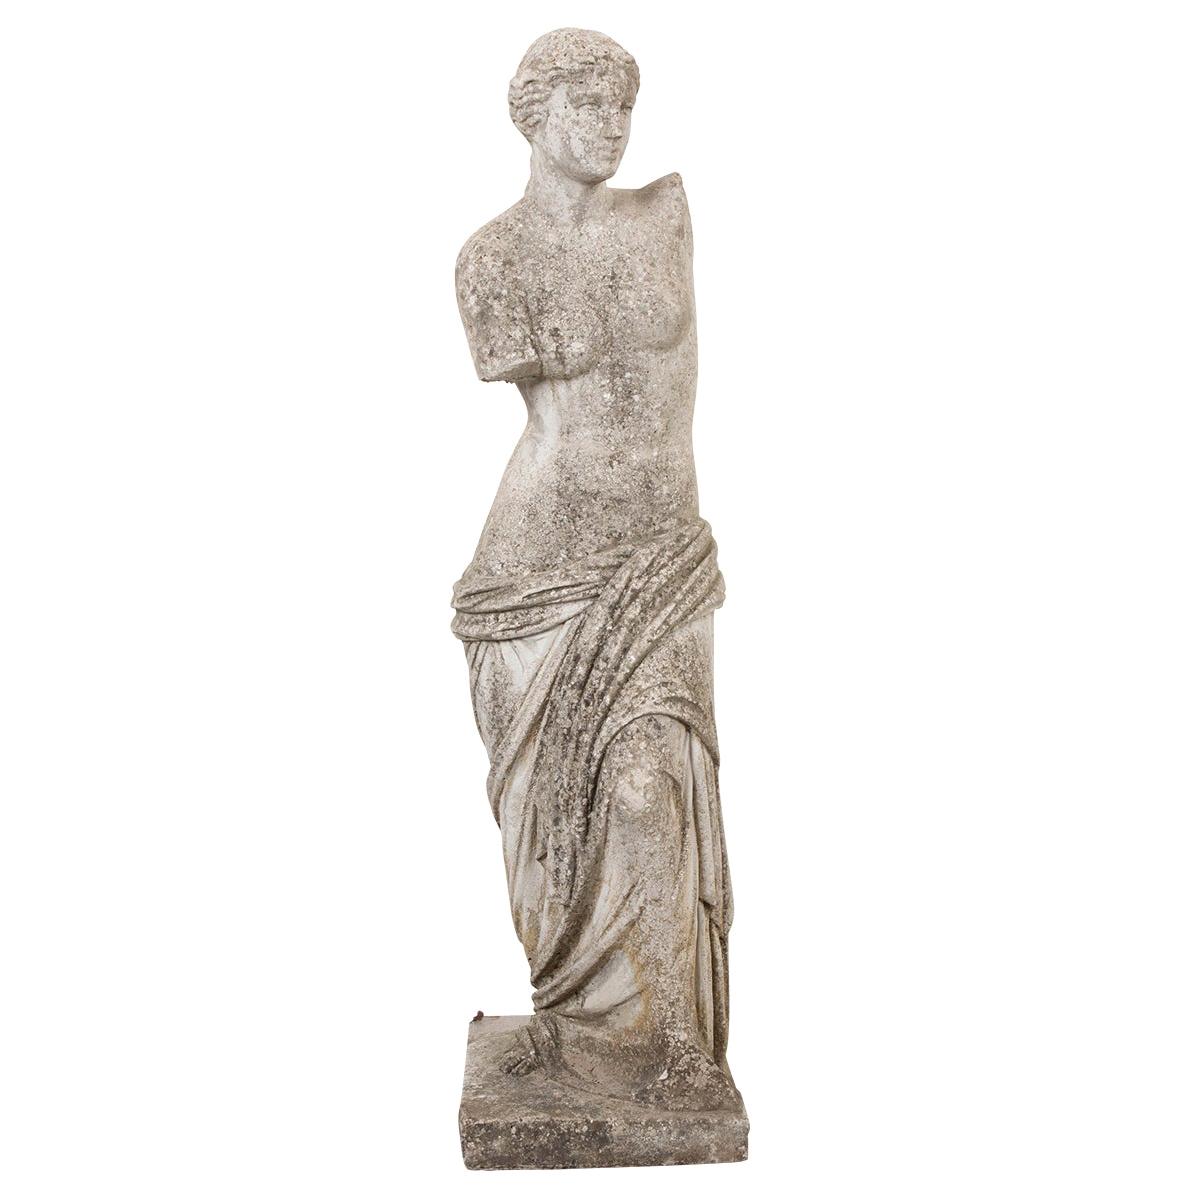 English 20th Century Carved Stone Statue of Venus de Milo